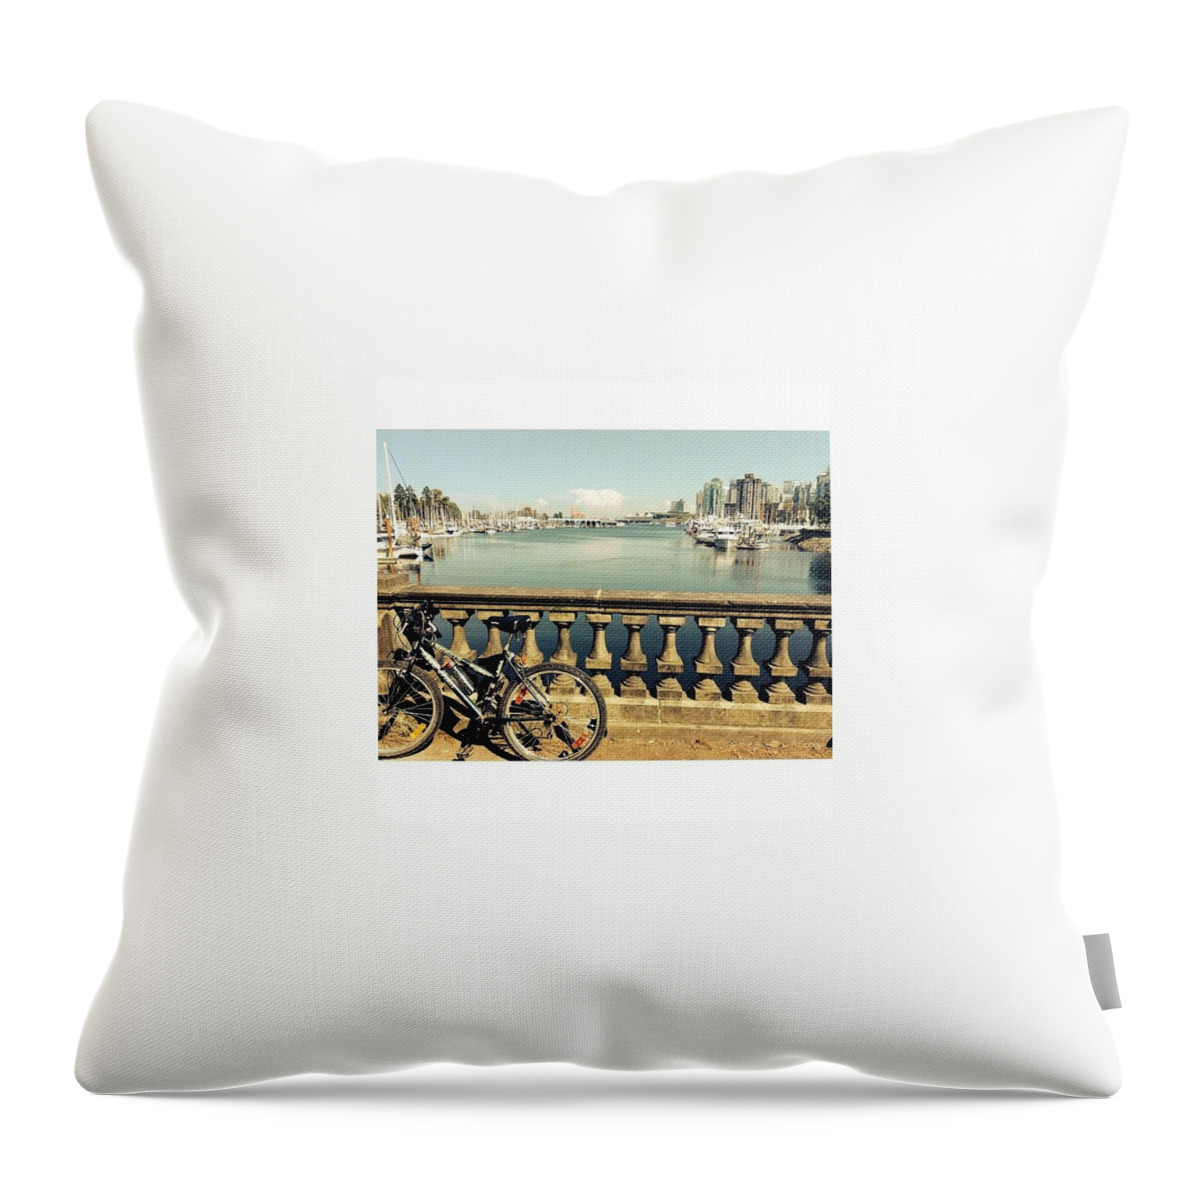 Beautiful Throw Pillow featuring the photograph Van city by Natalie Christensen